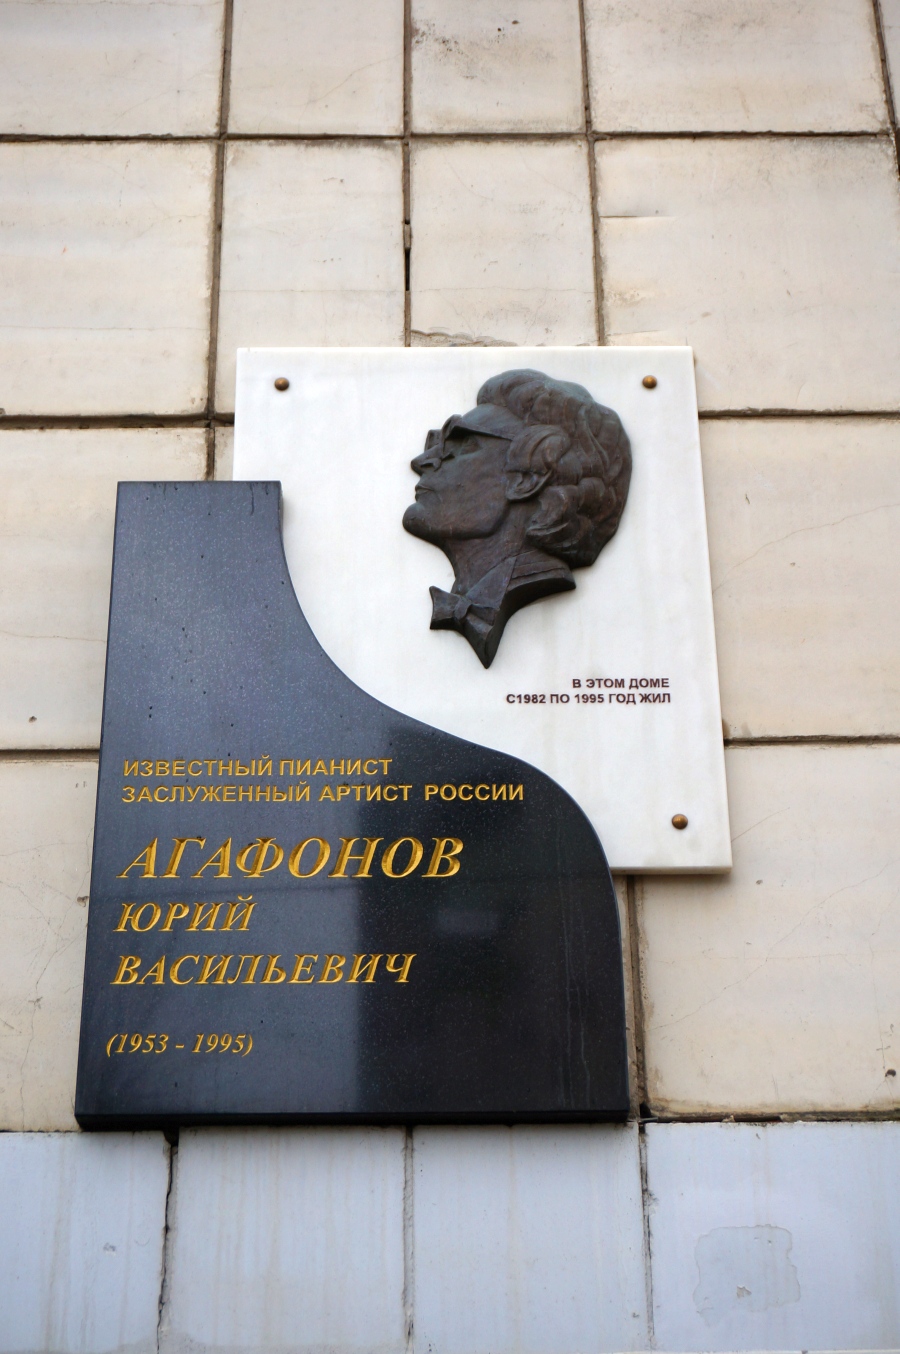 Perm, Улица 25 Октября, 22а. Perm — Memorial plaques